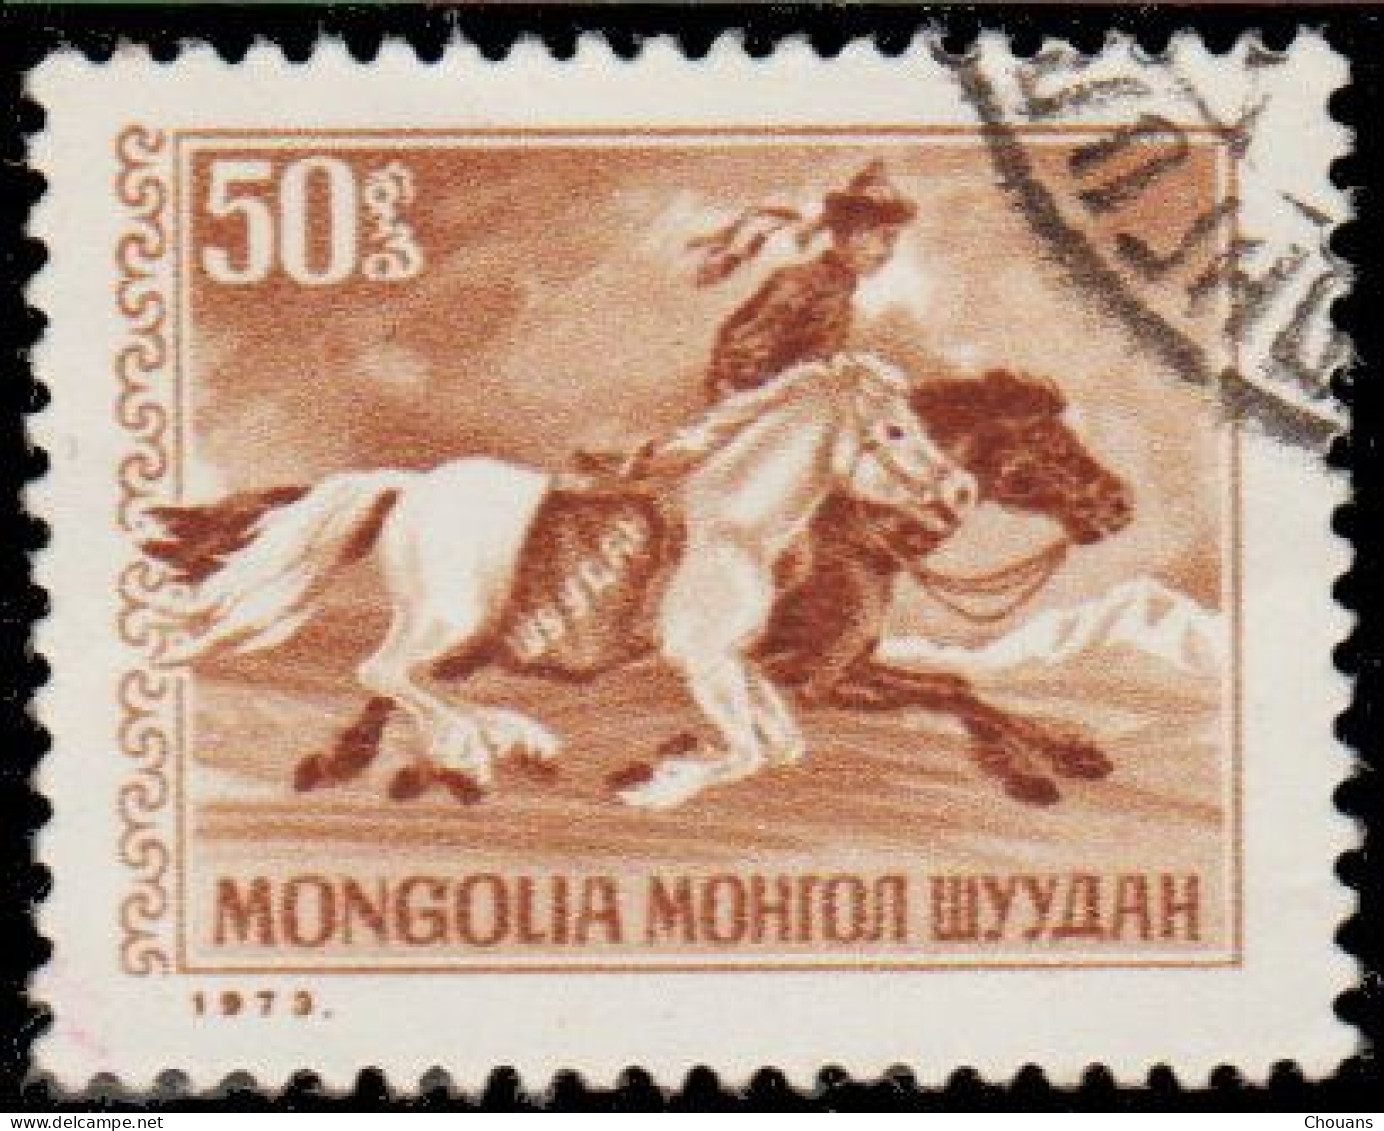 Mongolie 1973. ~ YT 659 - Chevaux - Mongolia